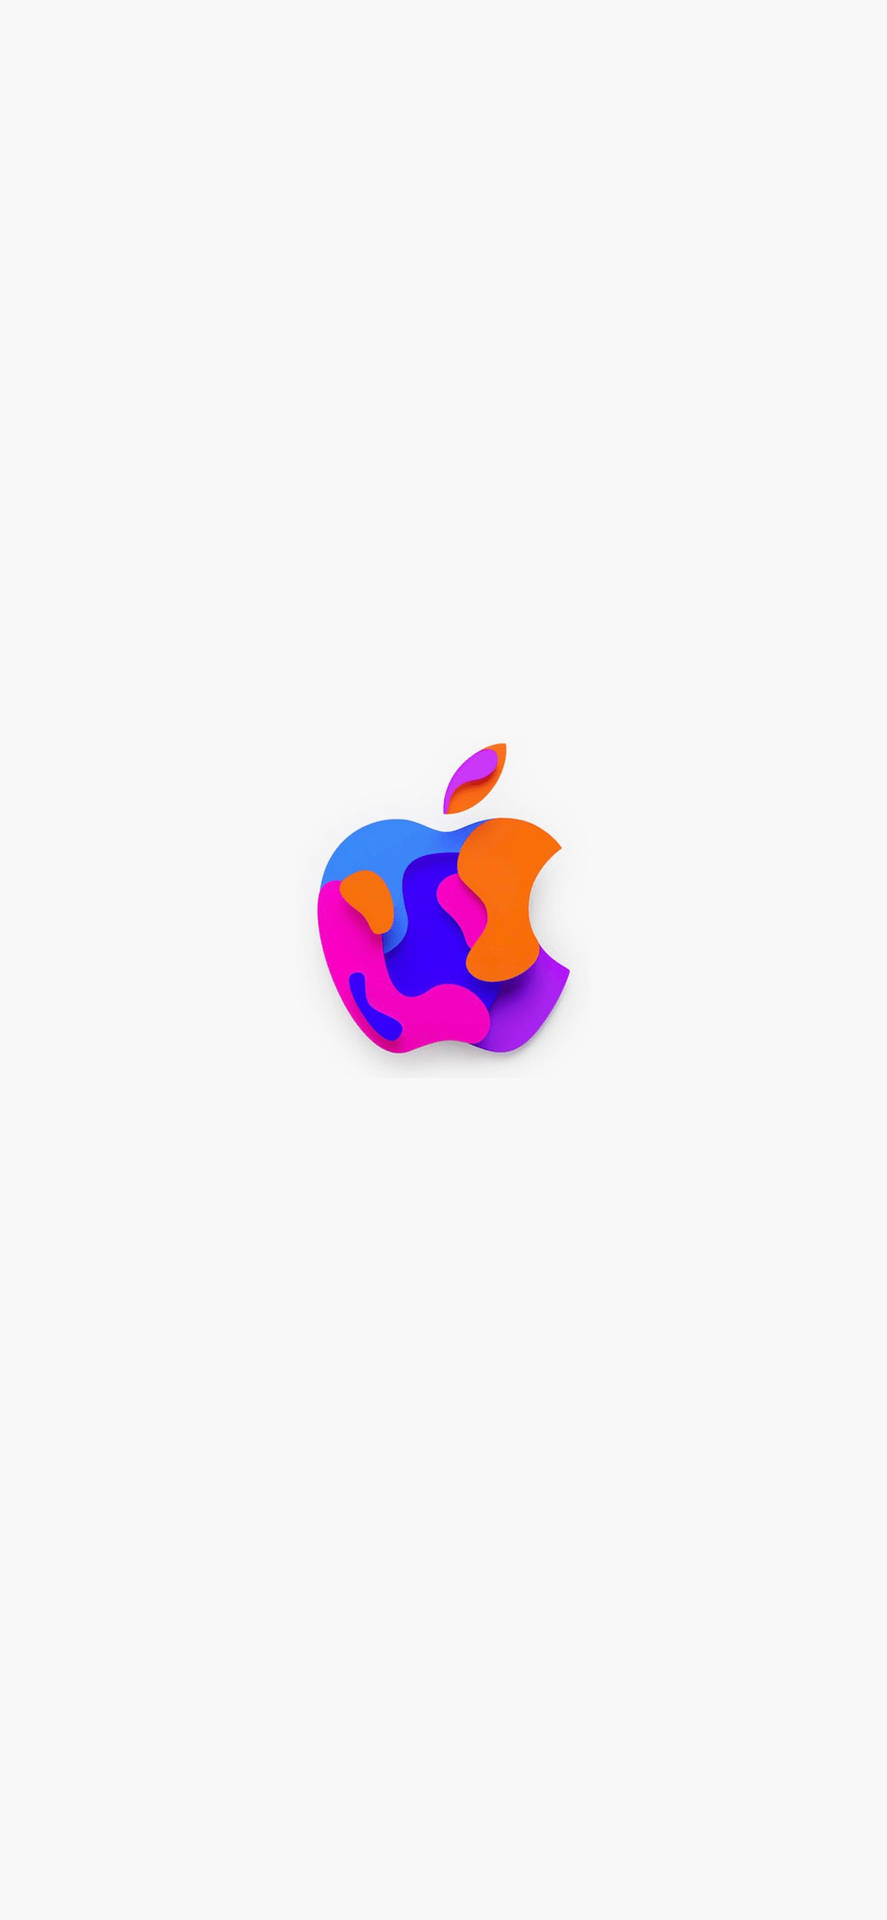 Vibrant Apple Logo Iphone Picture